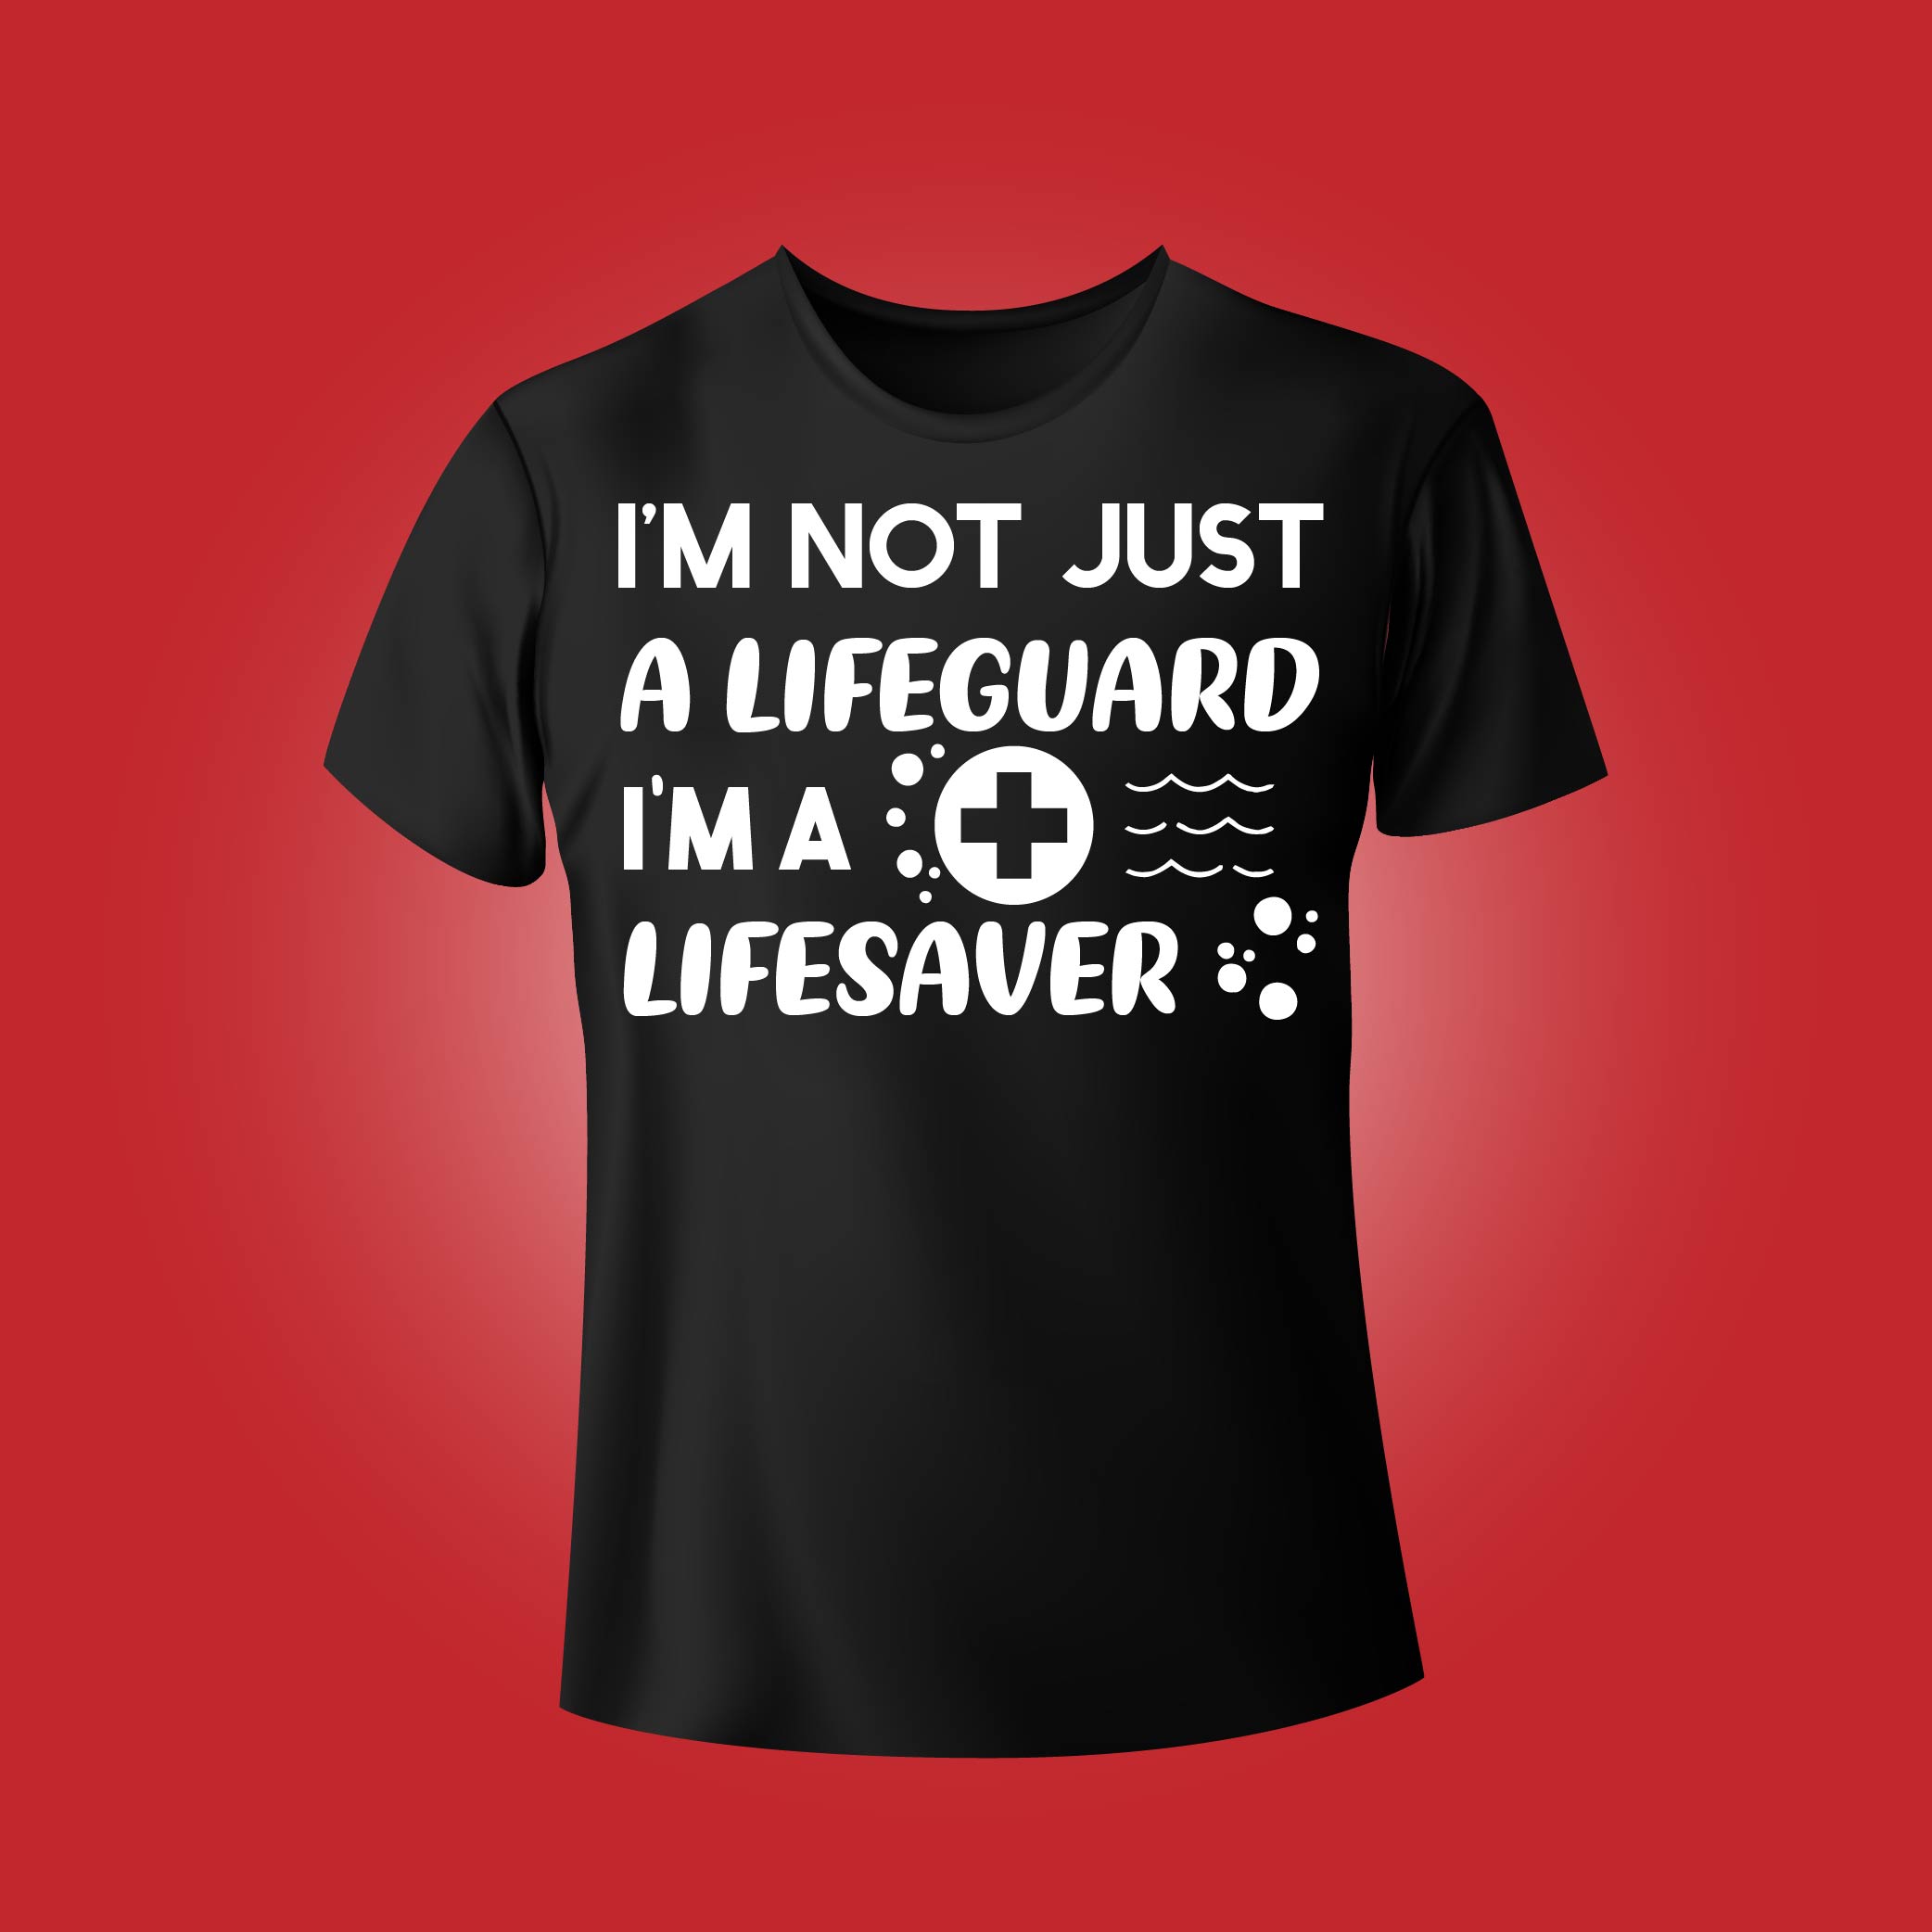 T - shirt that says i'm not just a lifeguard i '.